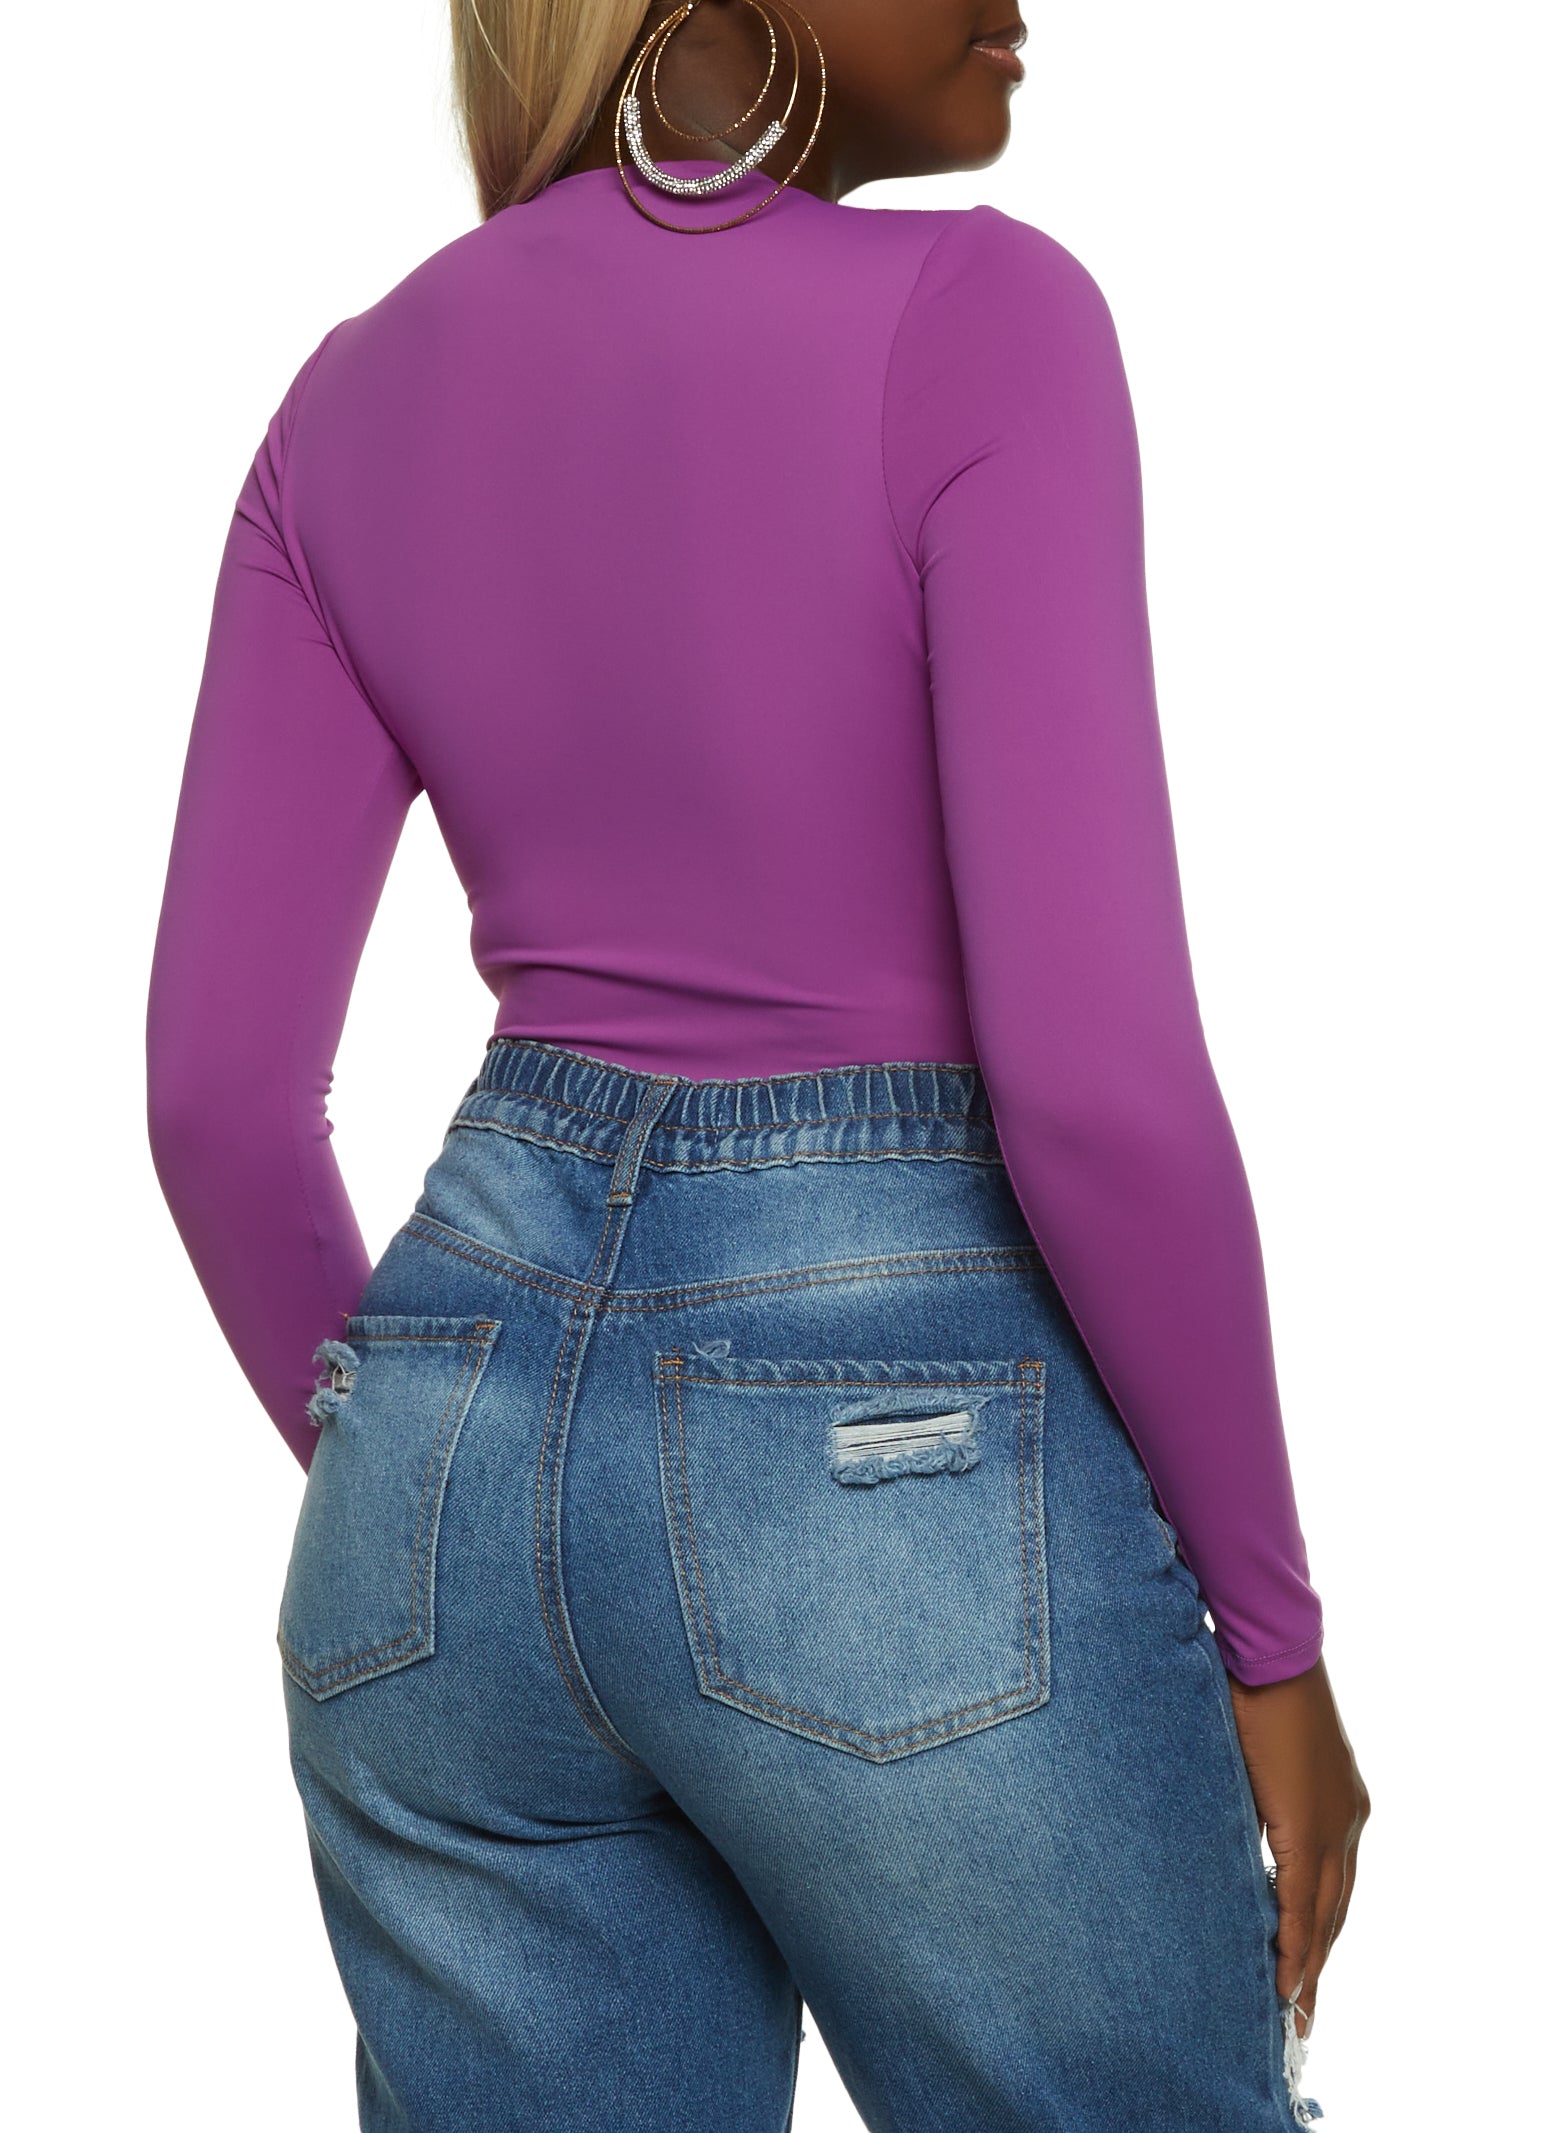 Express Bodycon Textured Square Neck Bodysuit Purple Women's M